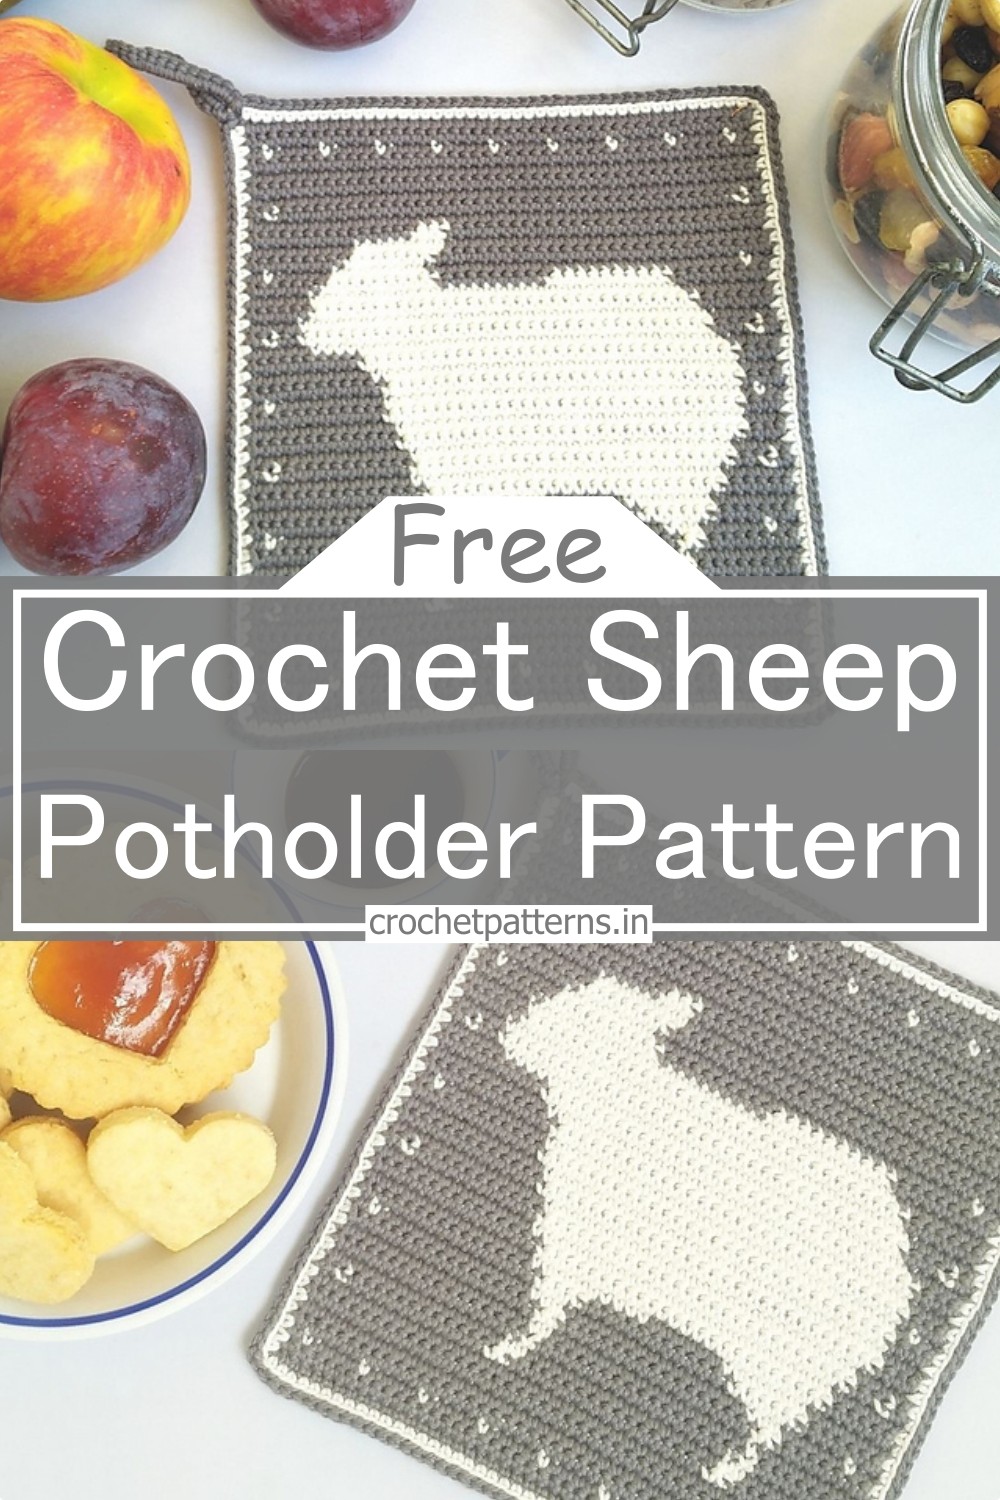 Crochet Sheep Potholder Pattern